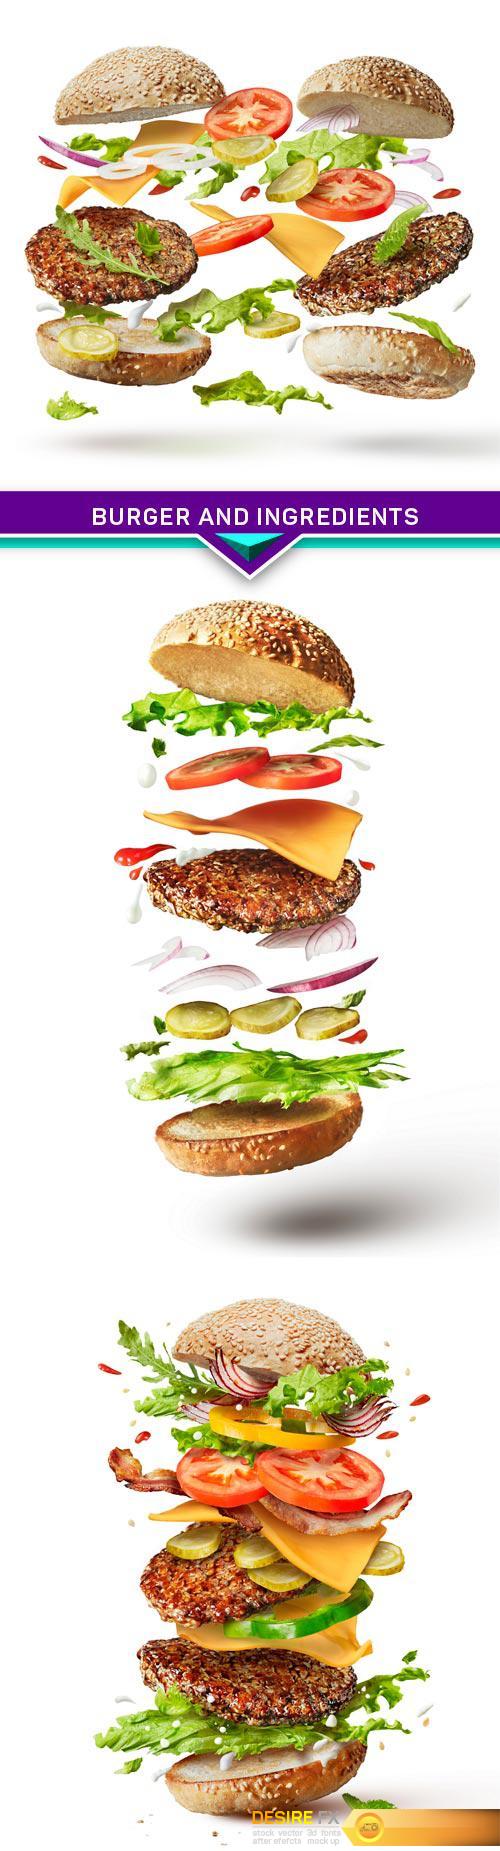 Burger and ingredients 3X JPEG